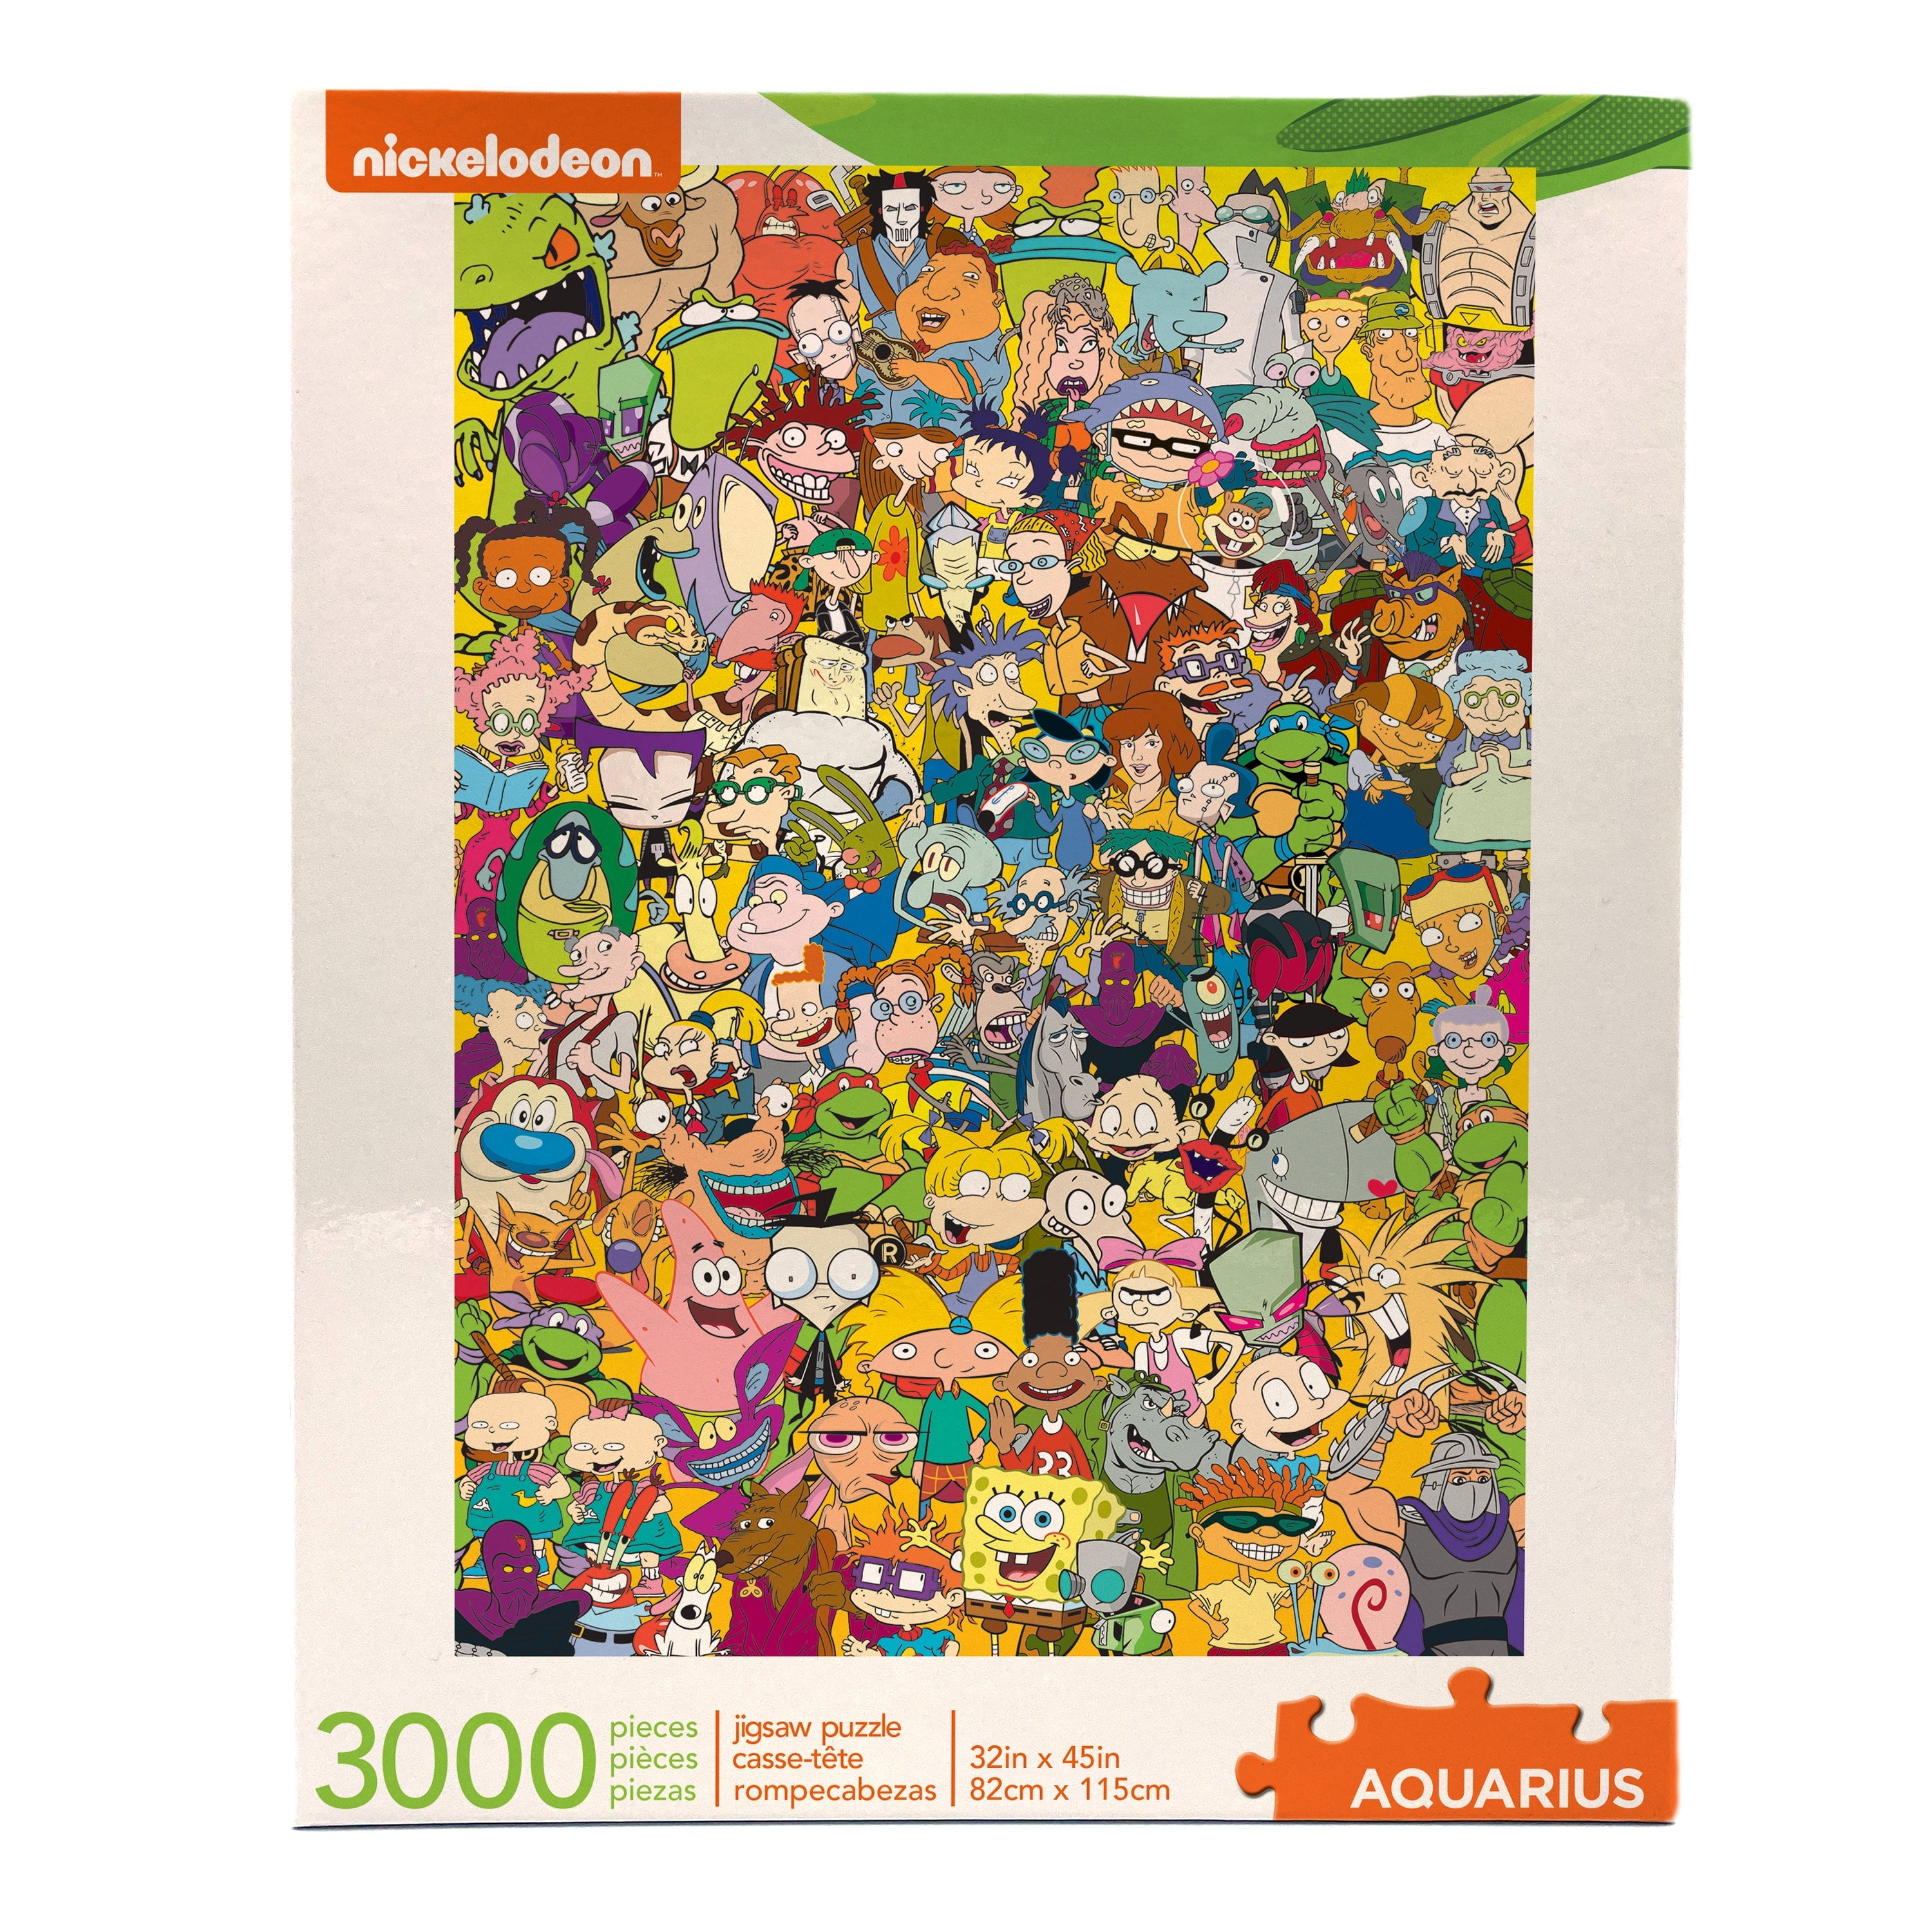 3000 pieces jigsaw puzzles - Puzzle Boulevard